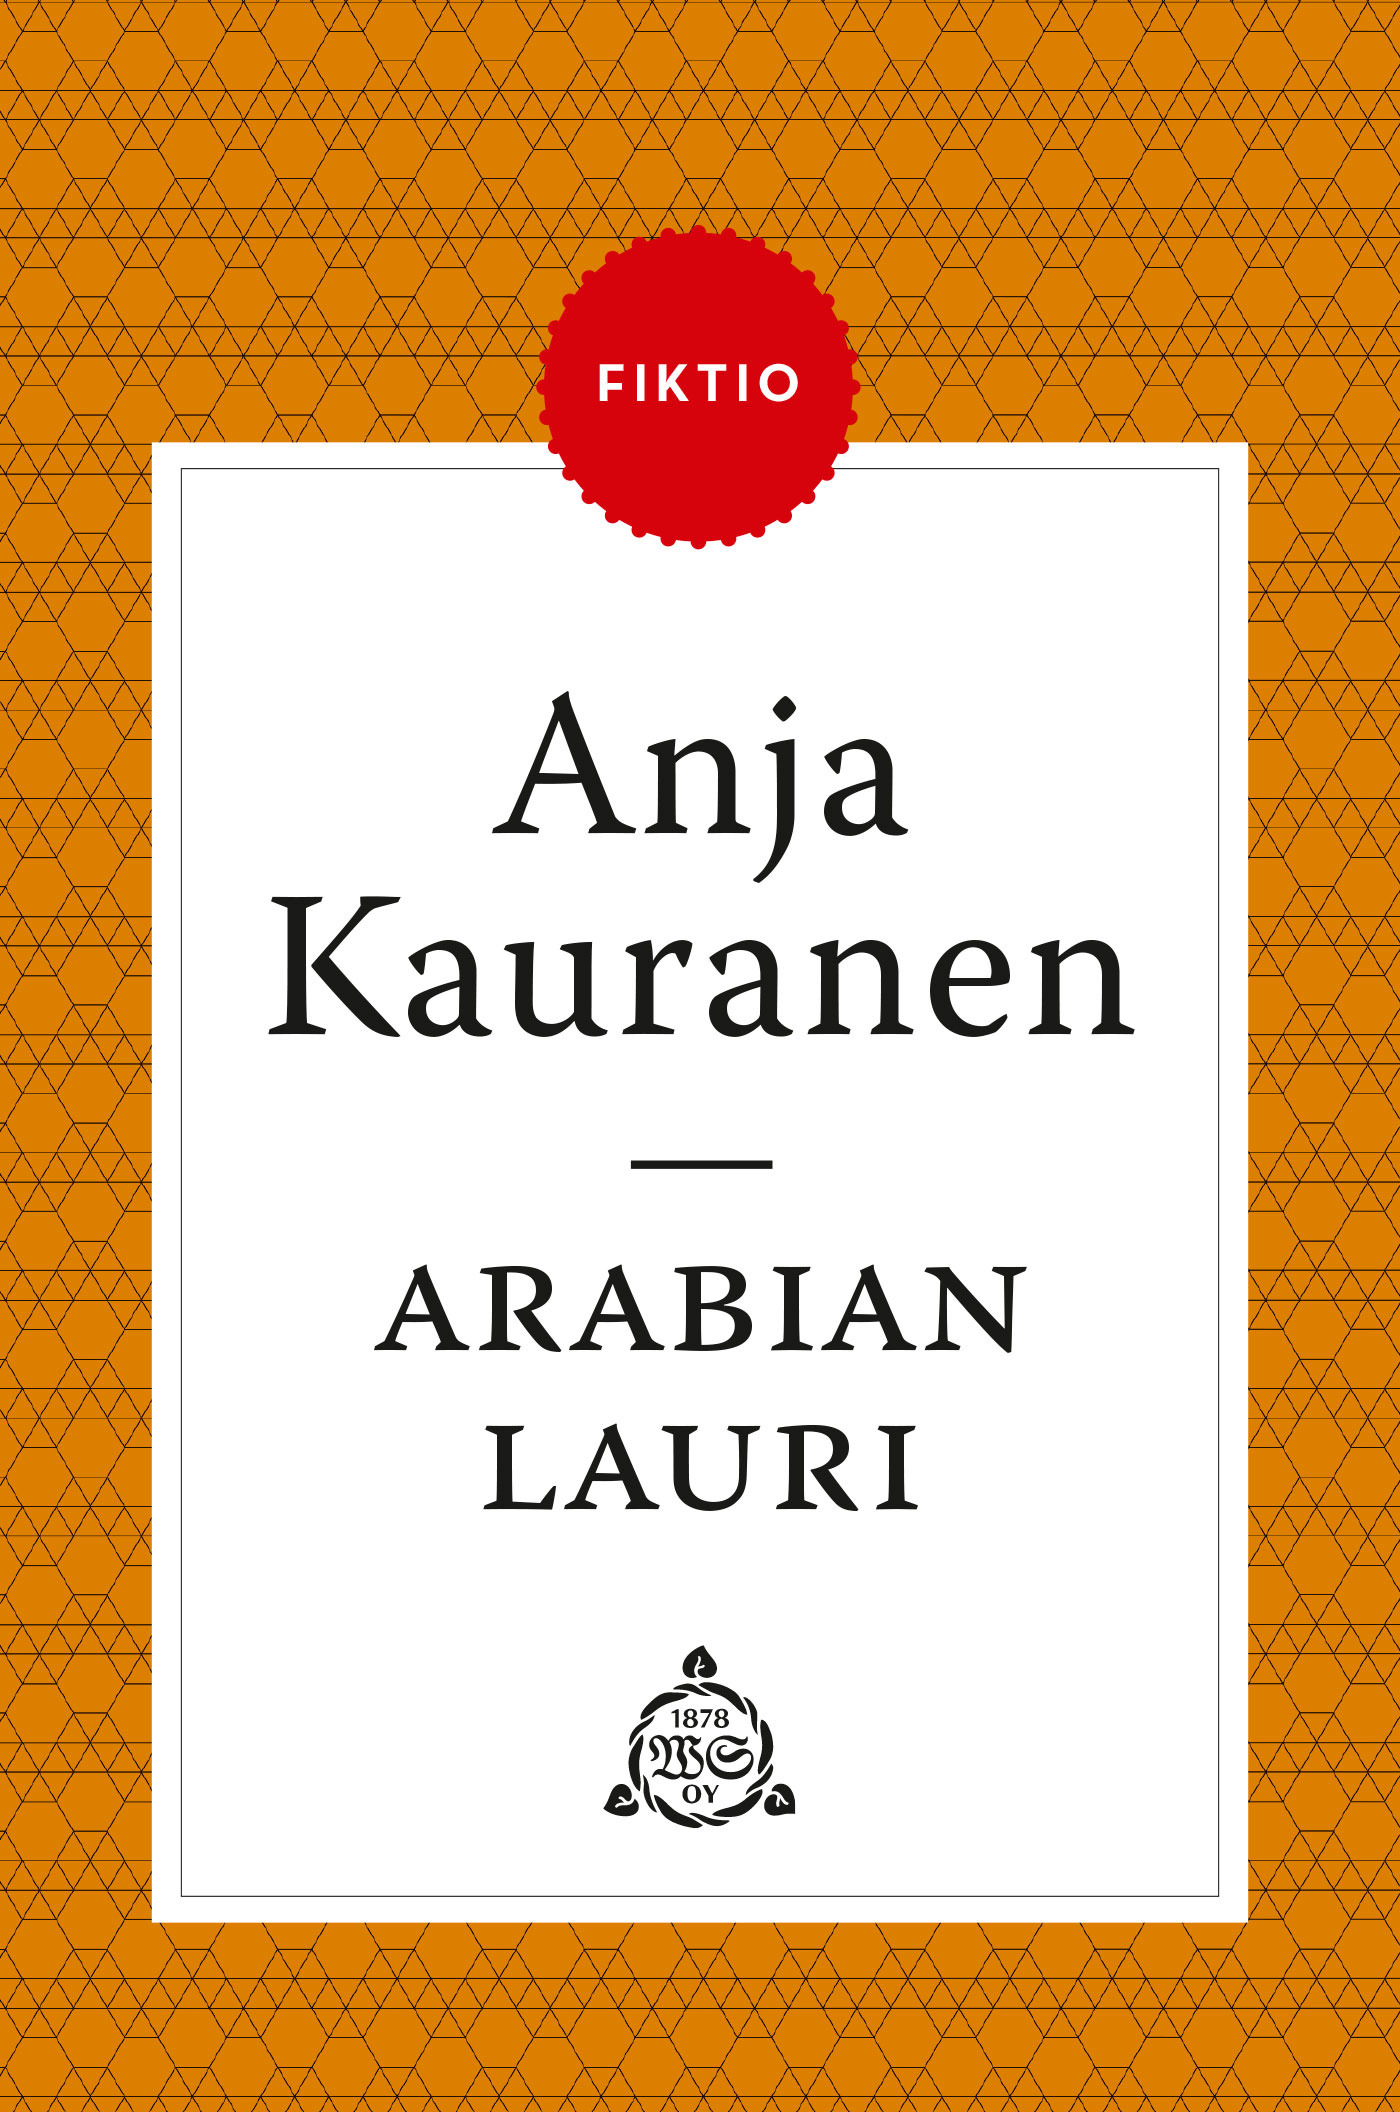 Kauranen, Anja - Arabian Lauri, ebook